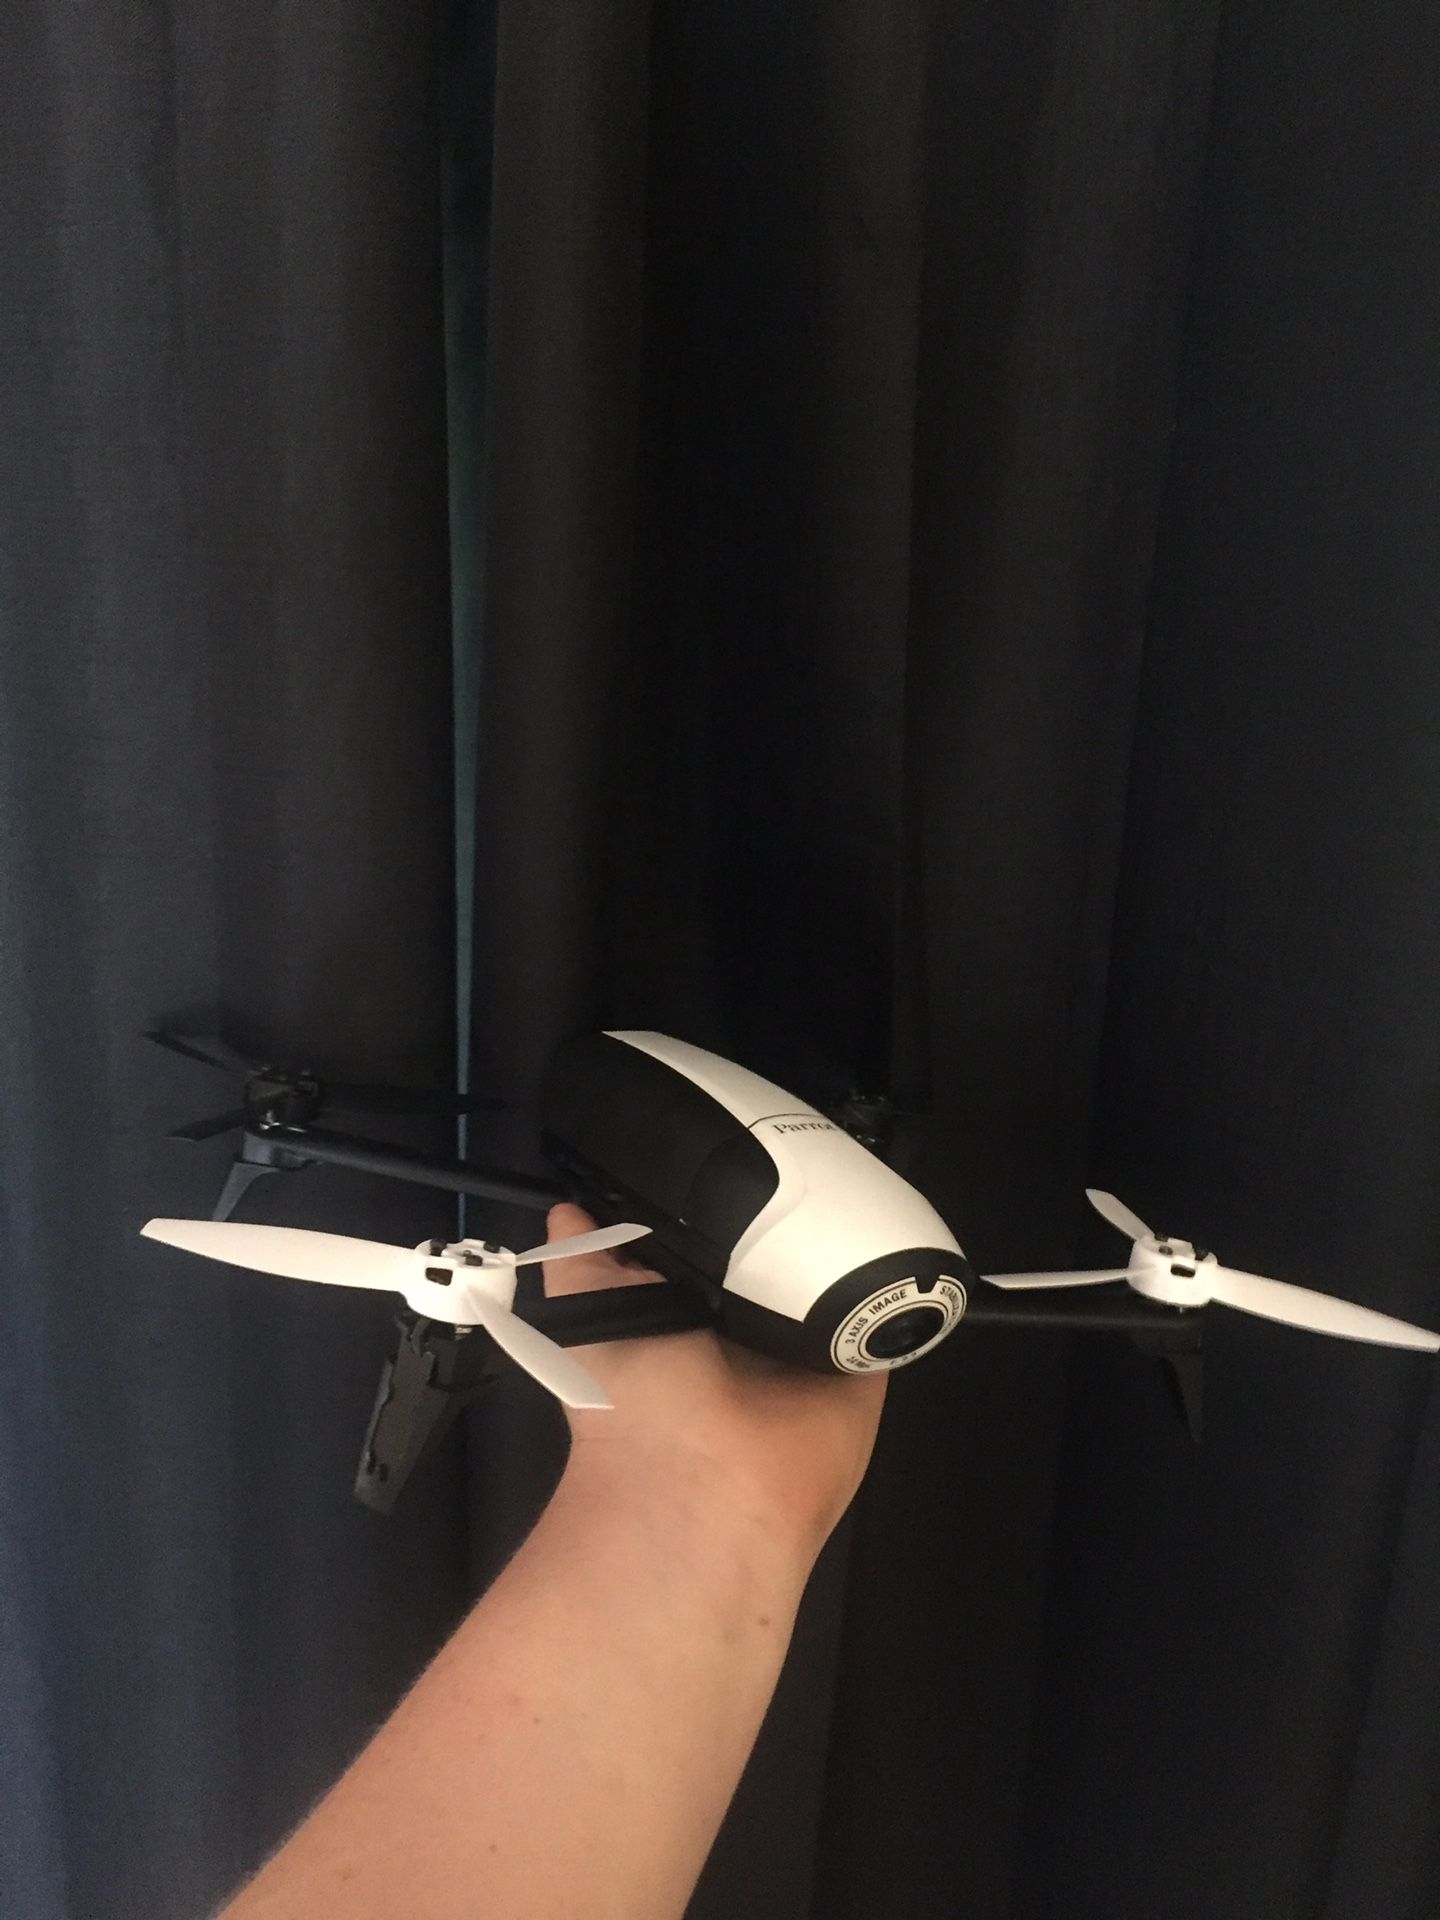 Parrot bebop 2 drone